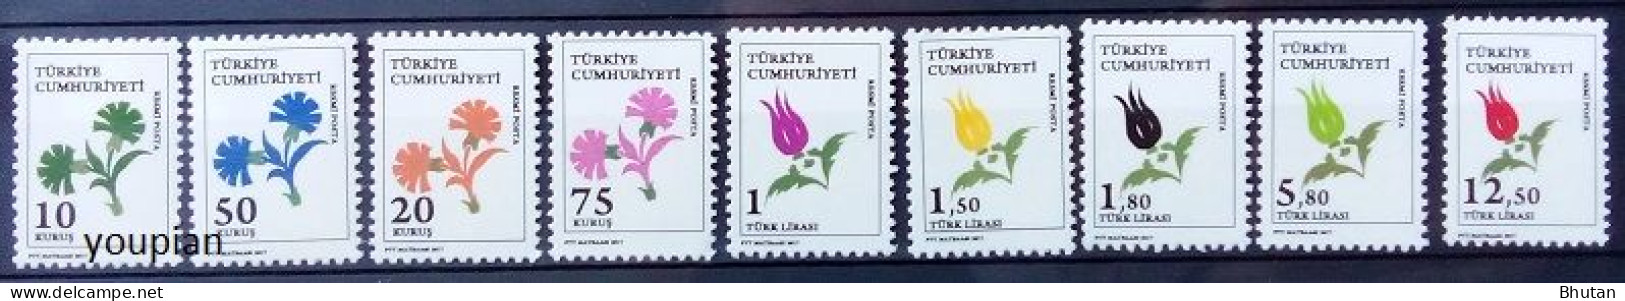 Türkiye 2017, Official Stamps - Flowers, MNH Stamps Set - Neufs